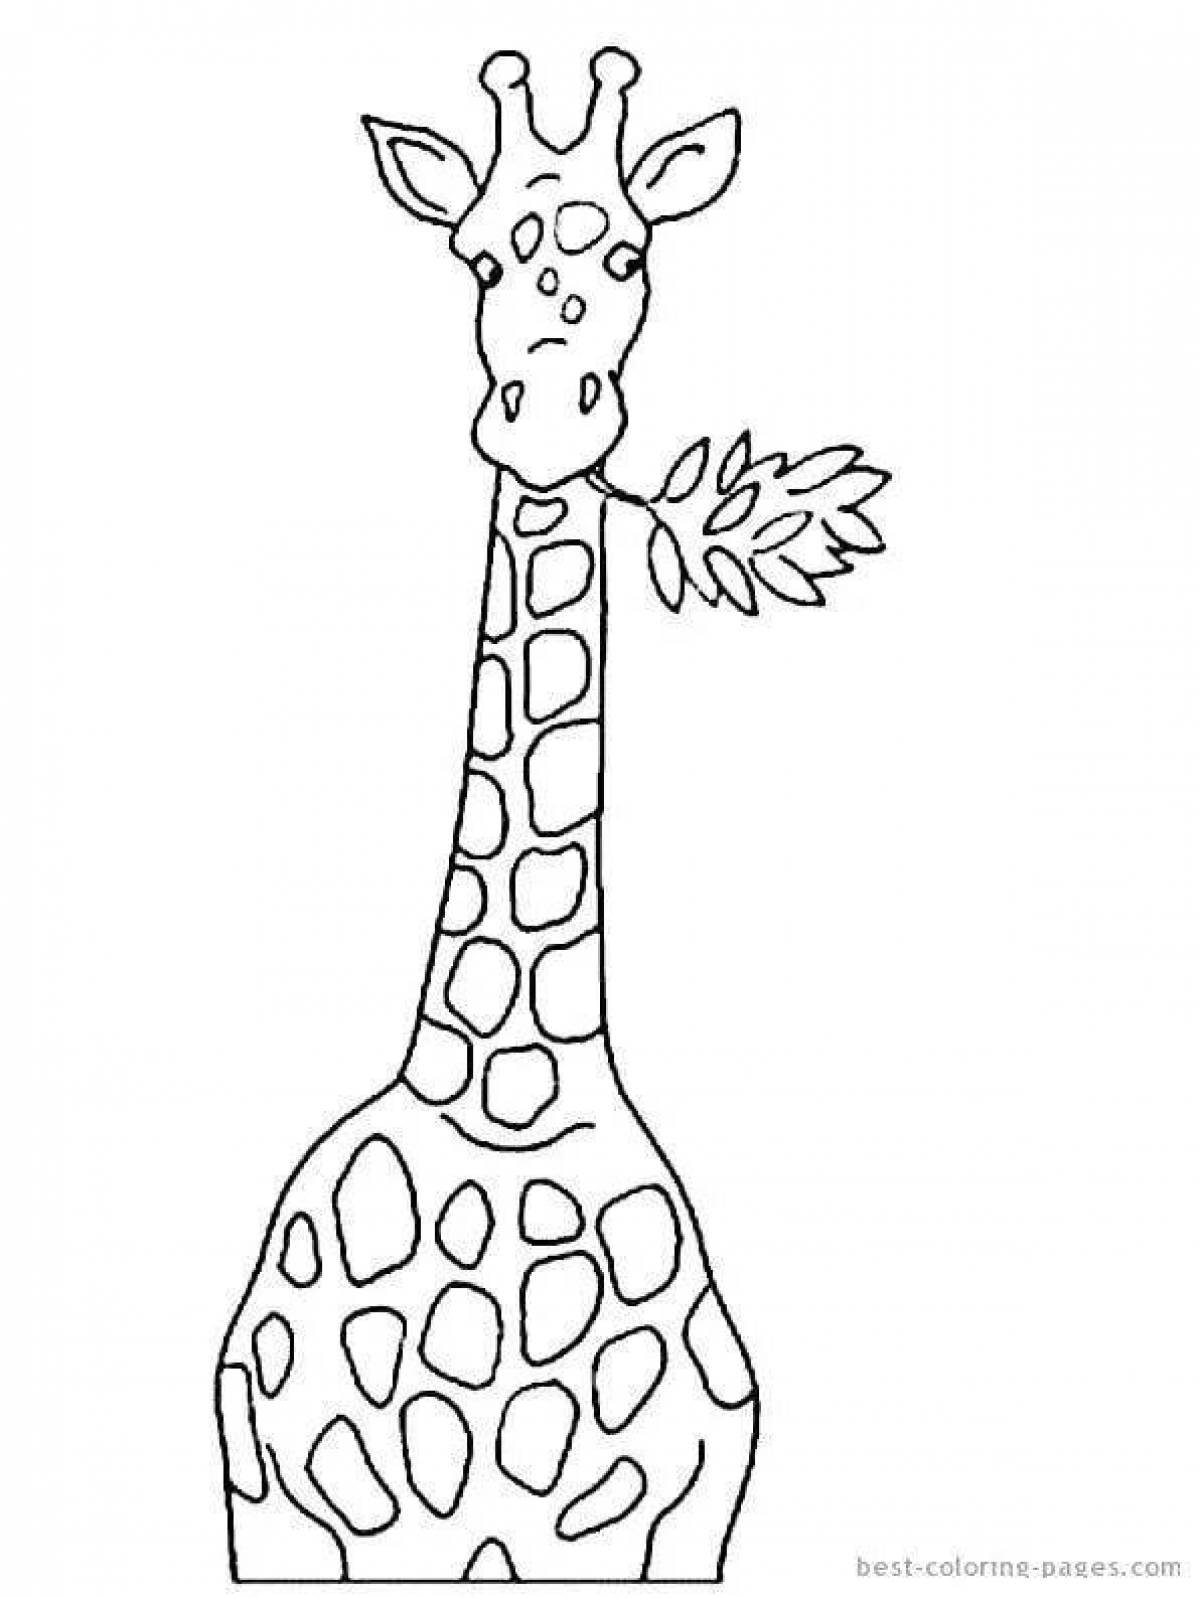 Shiny giraffe coloring book for kids